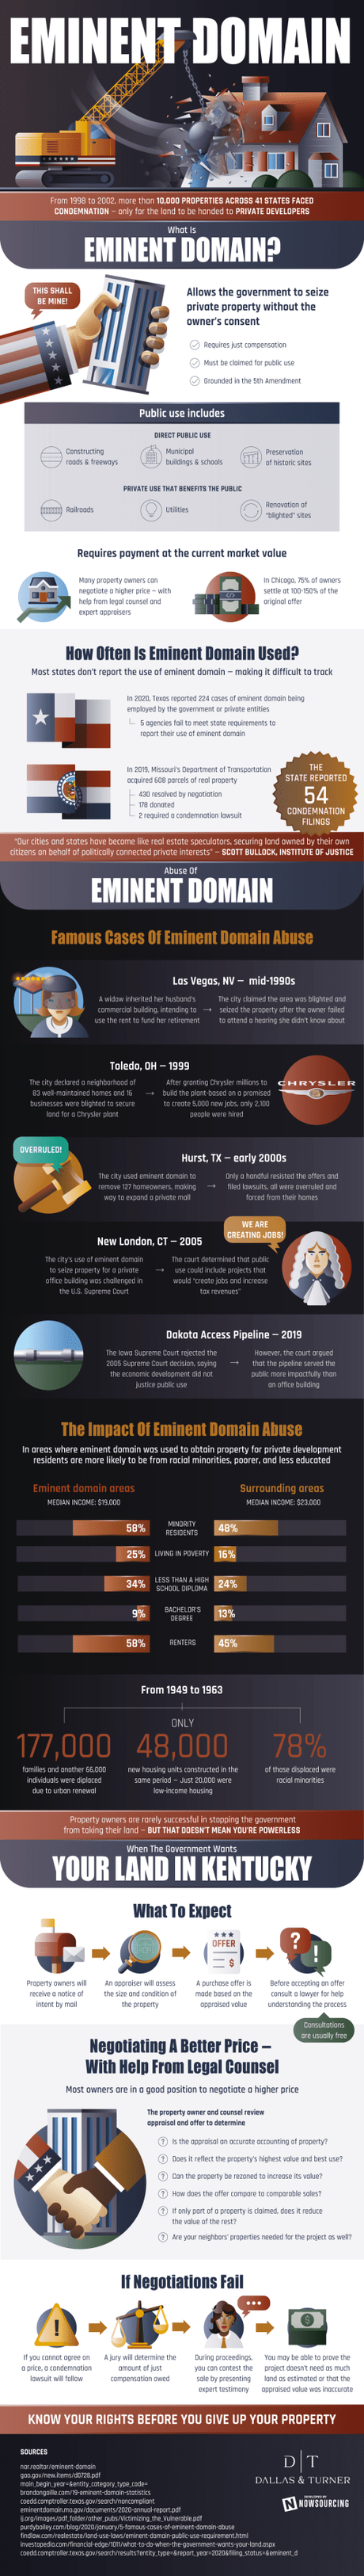 eminent domain infographic